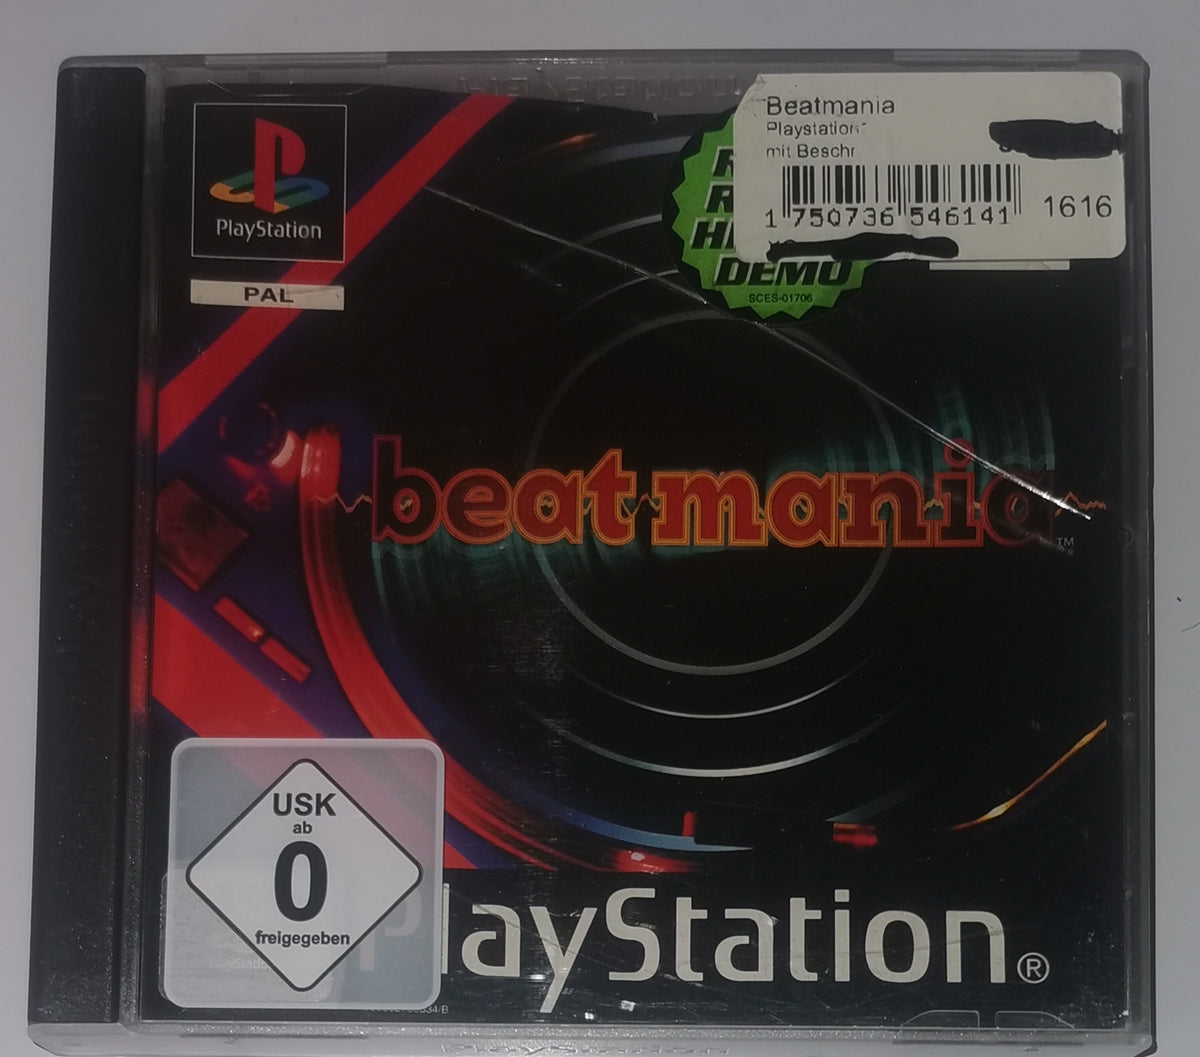 Beatmania incl DJController (Playstation 1) [Akzeptabel]